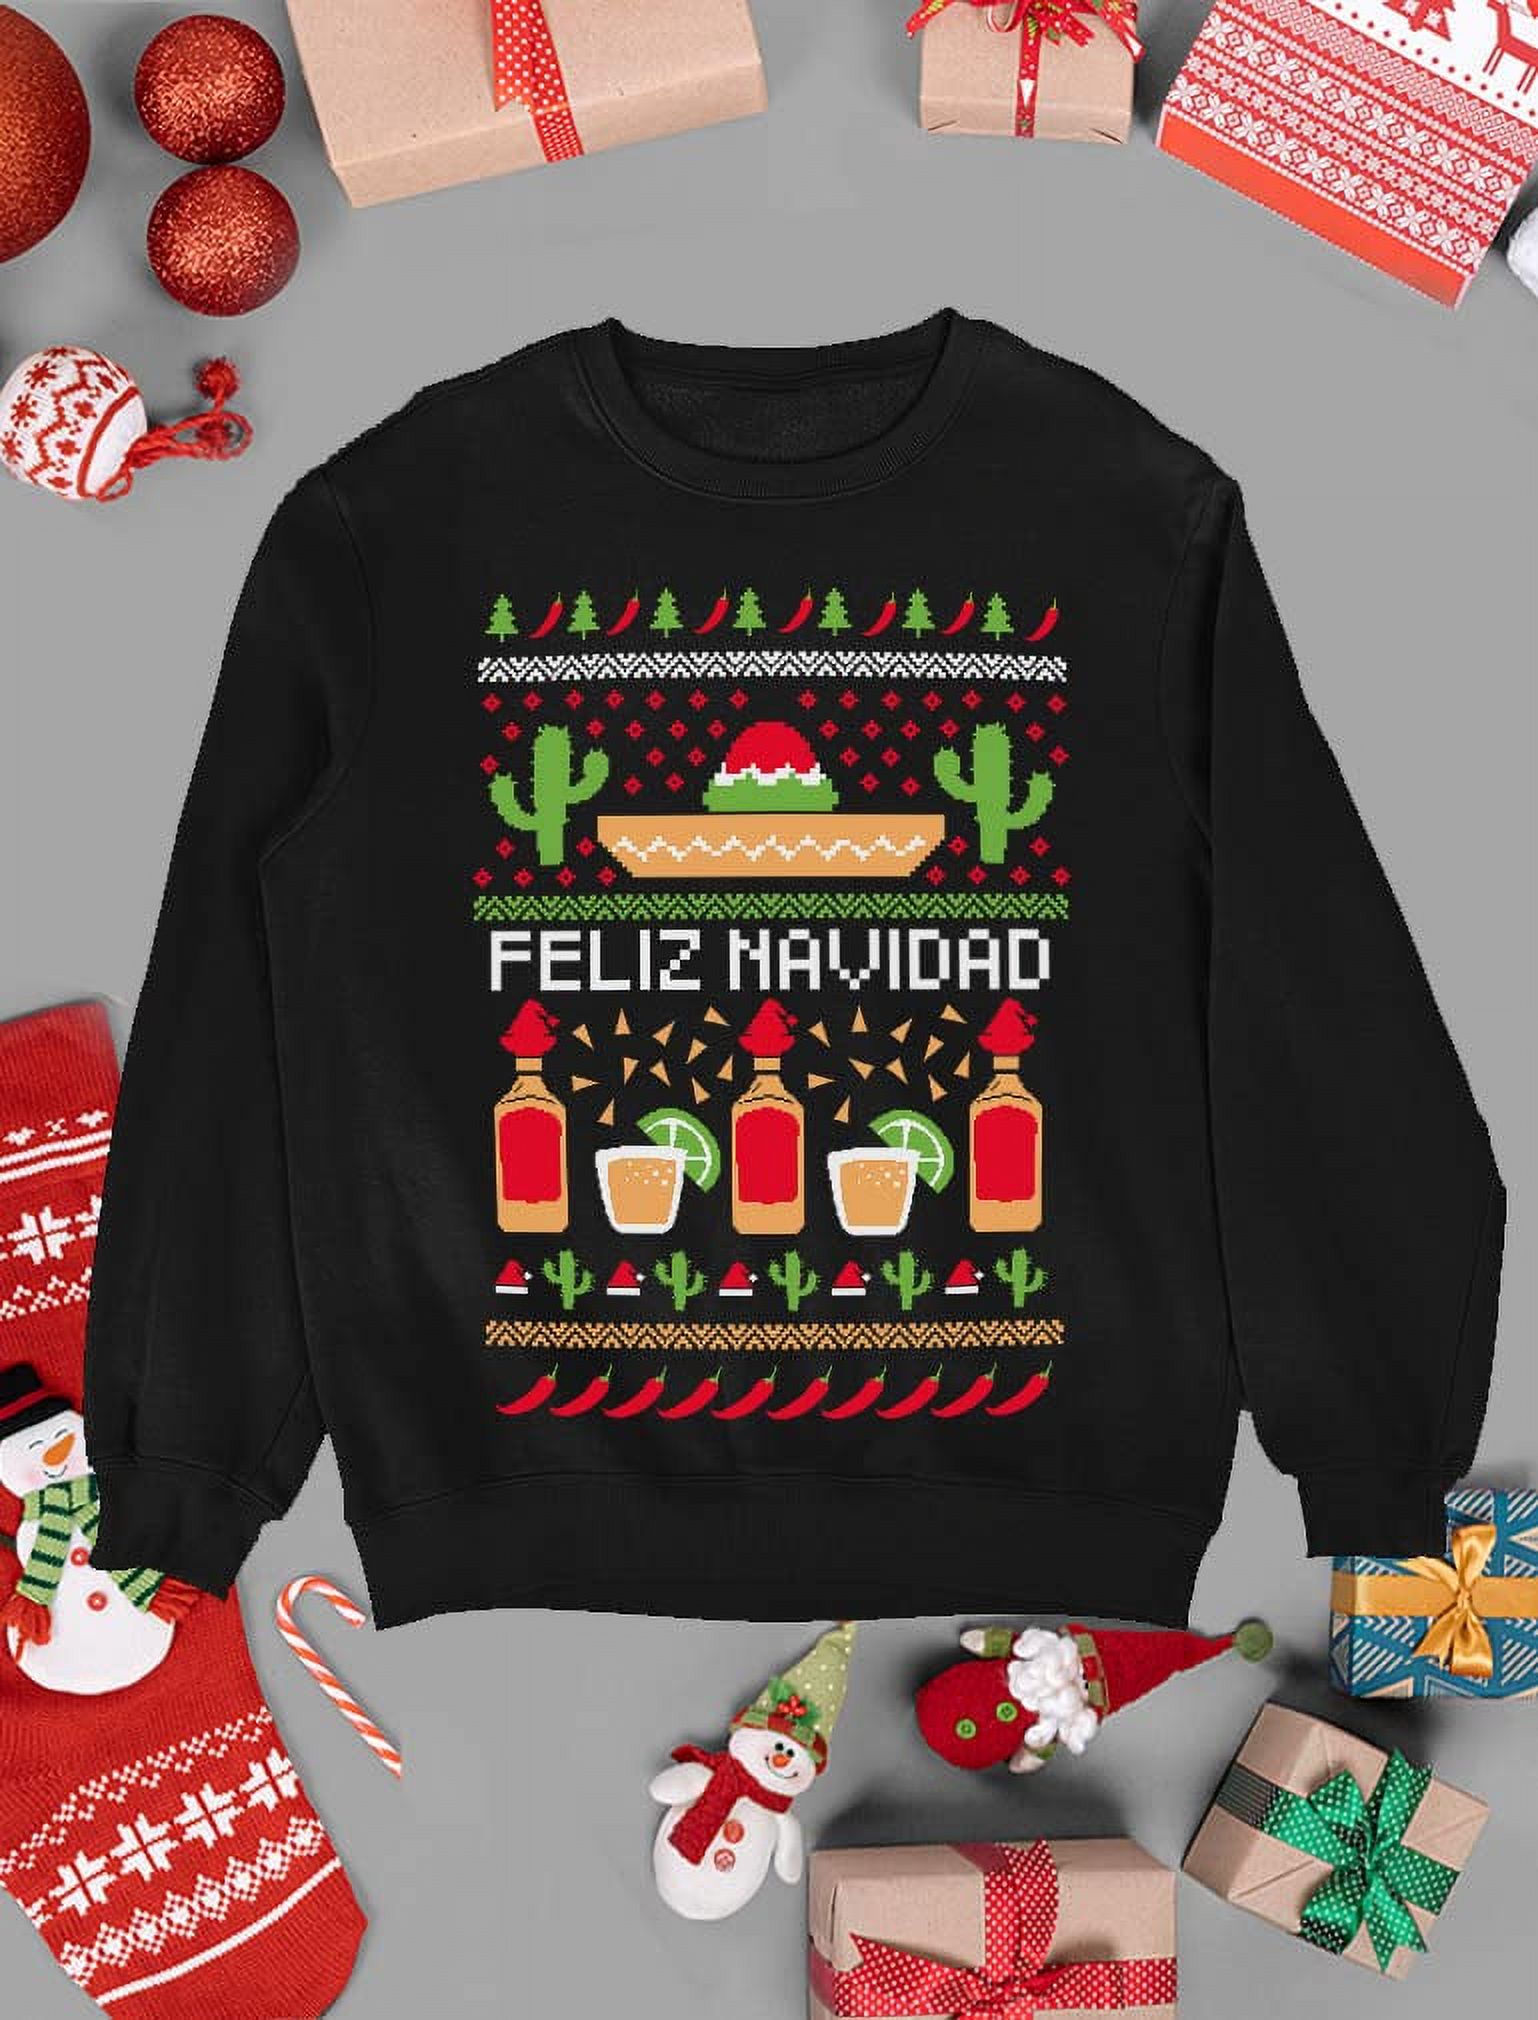 Tstars Mens Ugly Christmas Feliz Navidad Mexican Xmas Gift Christmas Gift Funny Humor Holiday Shirts Xmas Party Christmas Gifts for Him Sweatshirt. - image 3 of 6